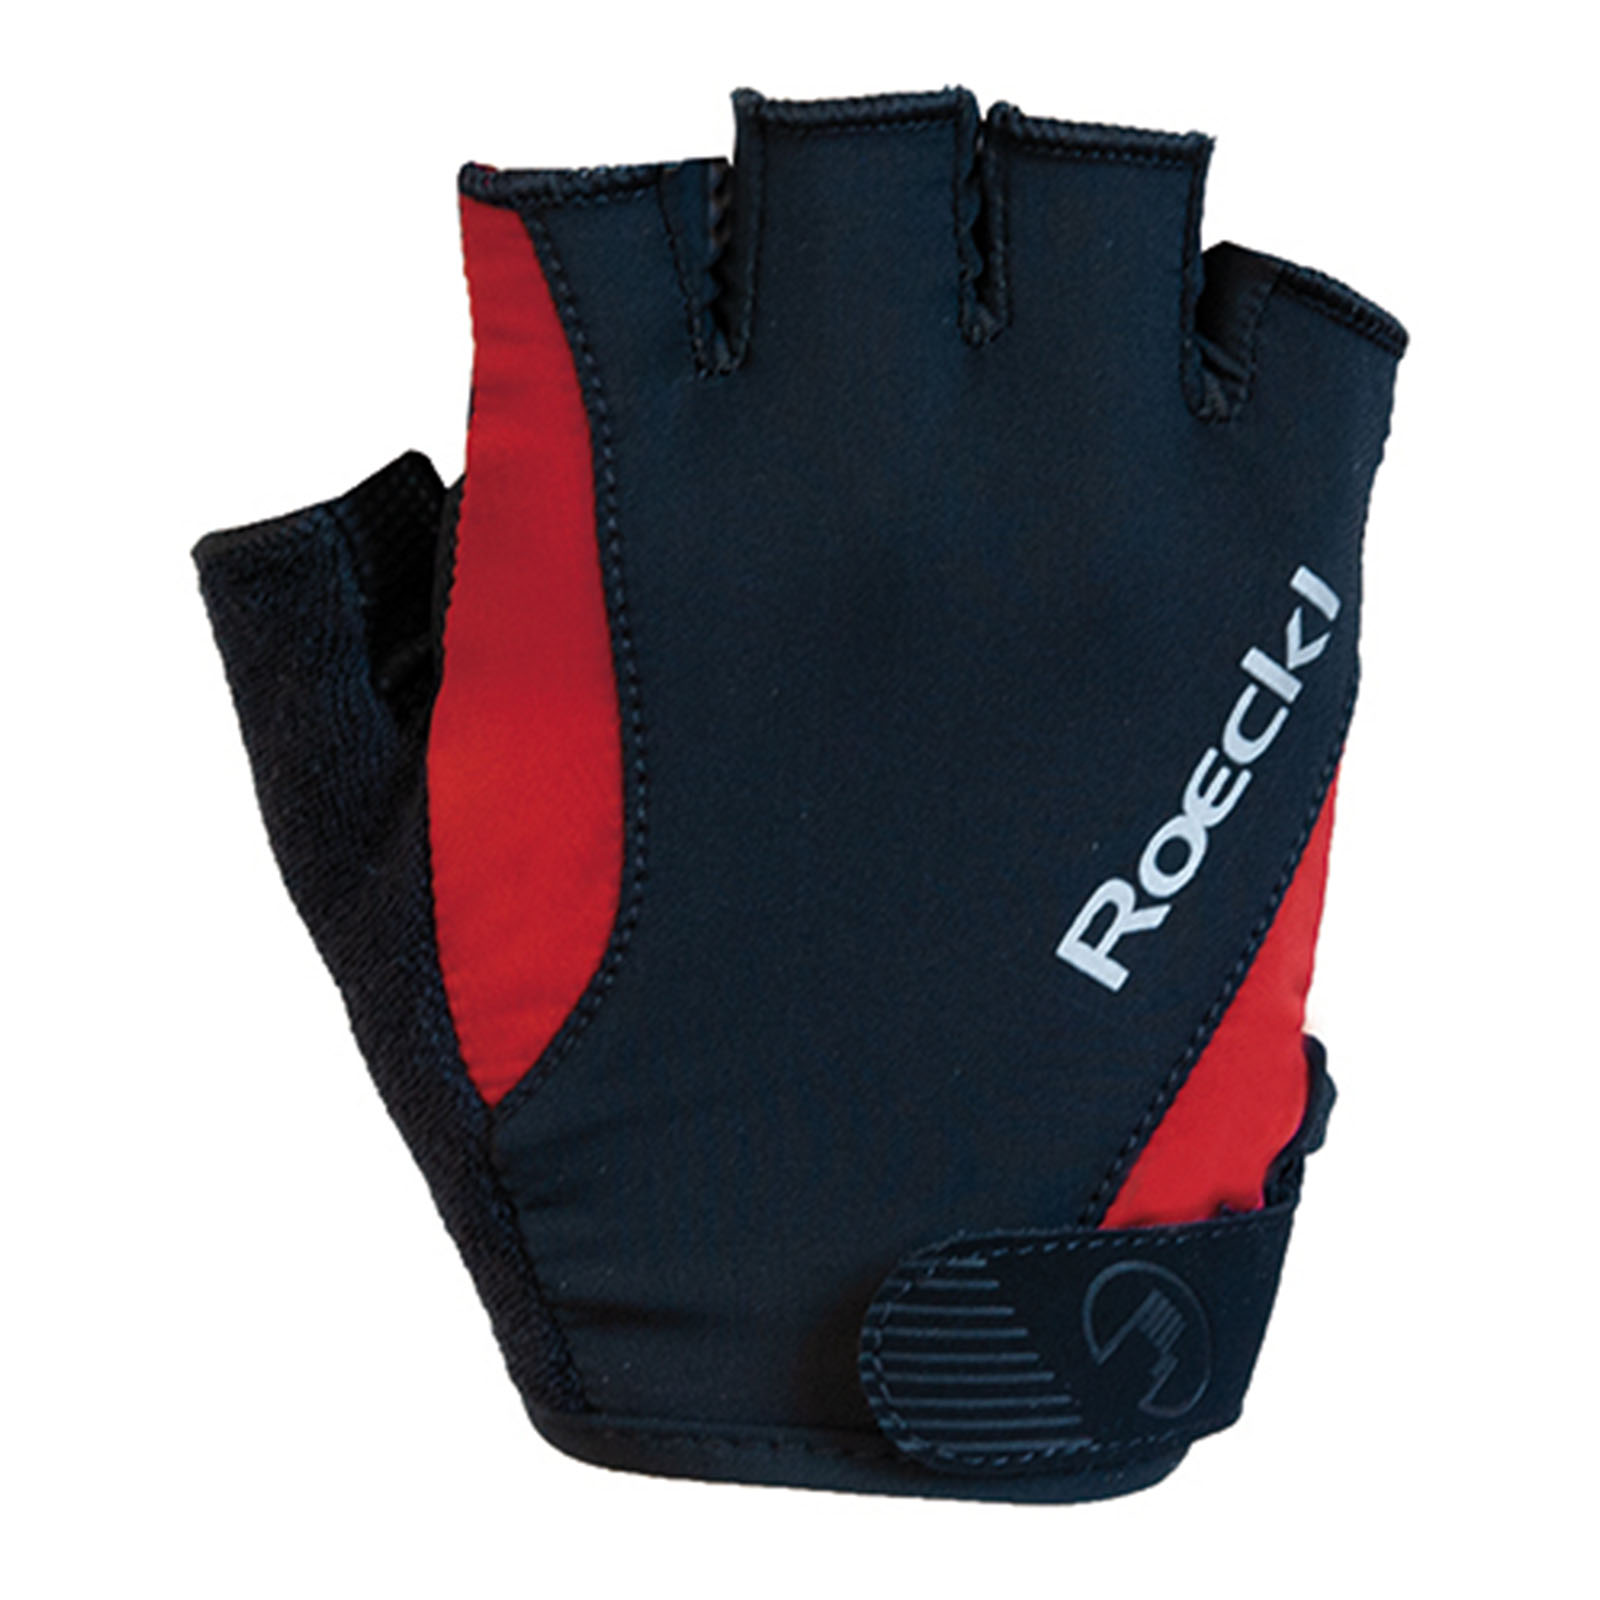 Roeckl Handschuhe Performance Basel schwarz/rot Gr. 11